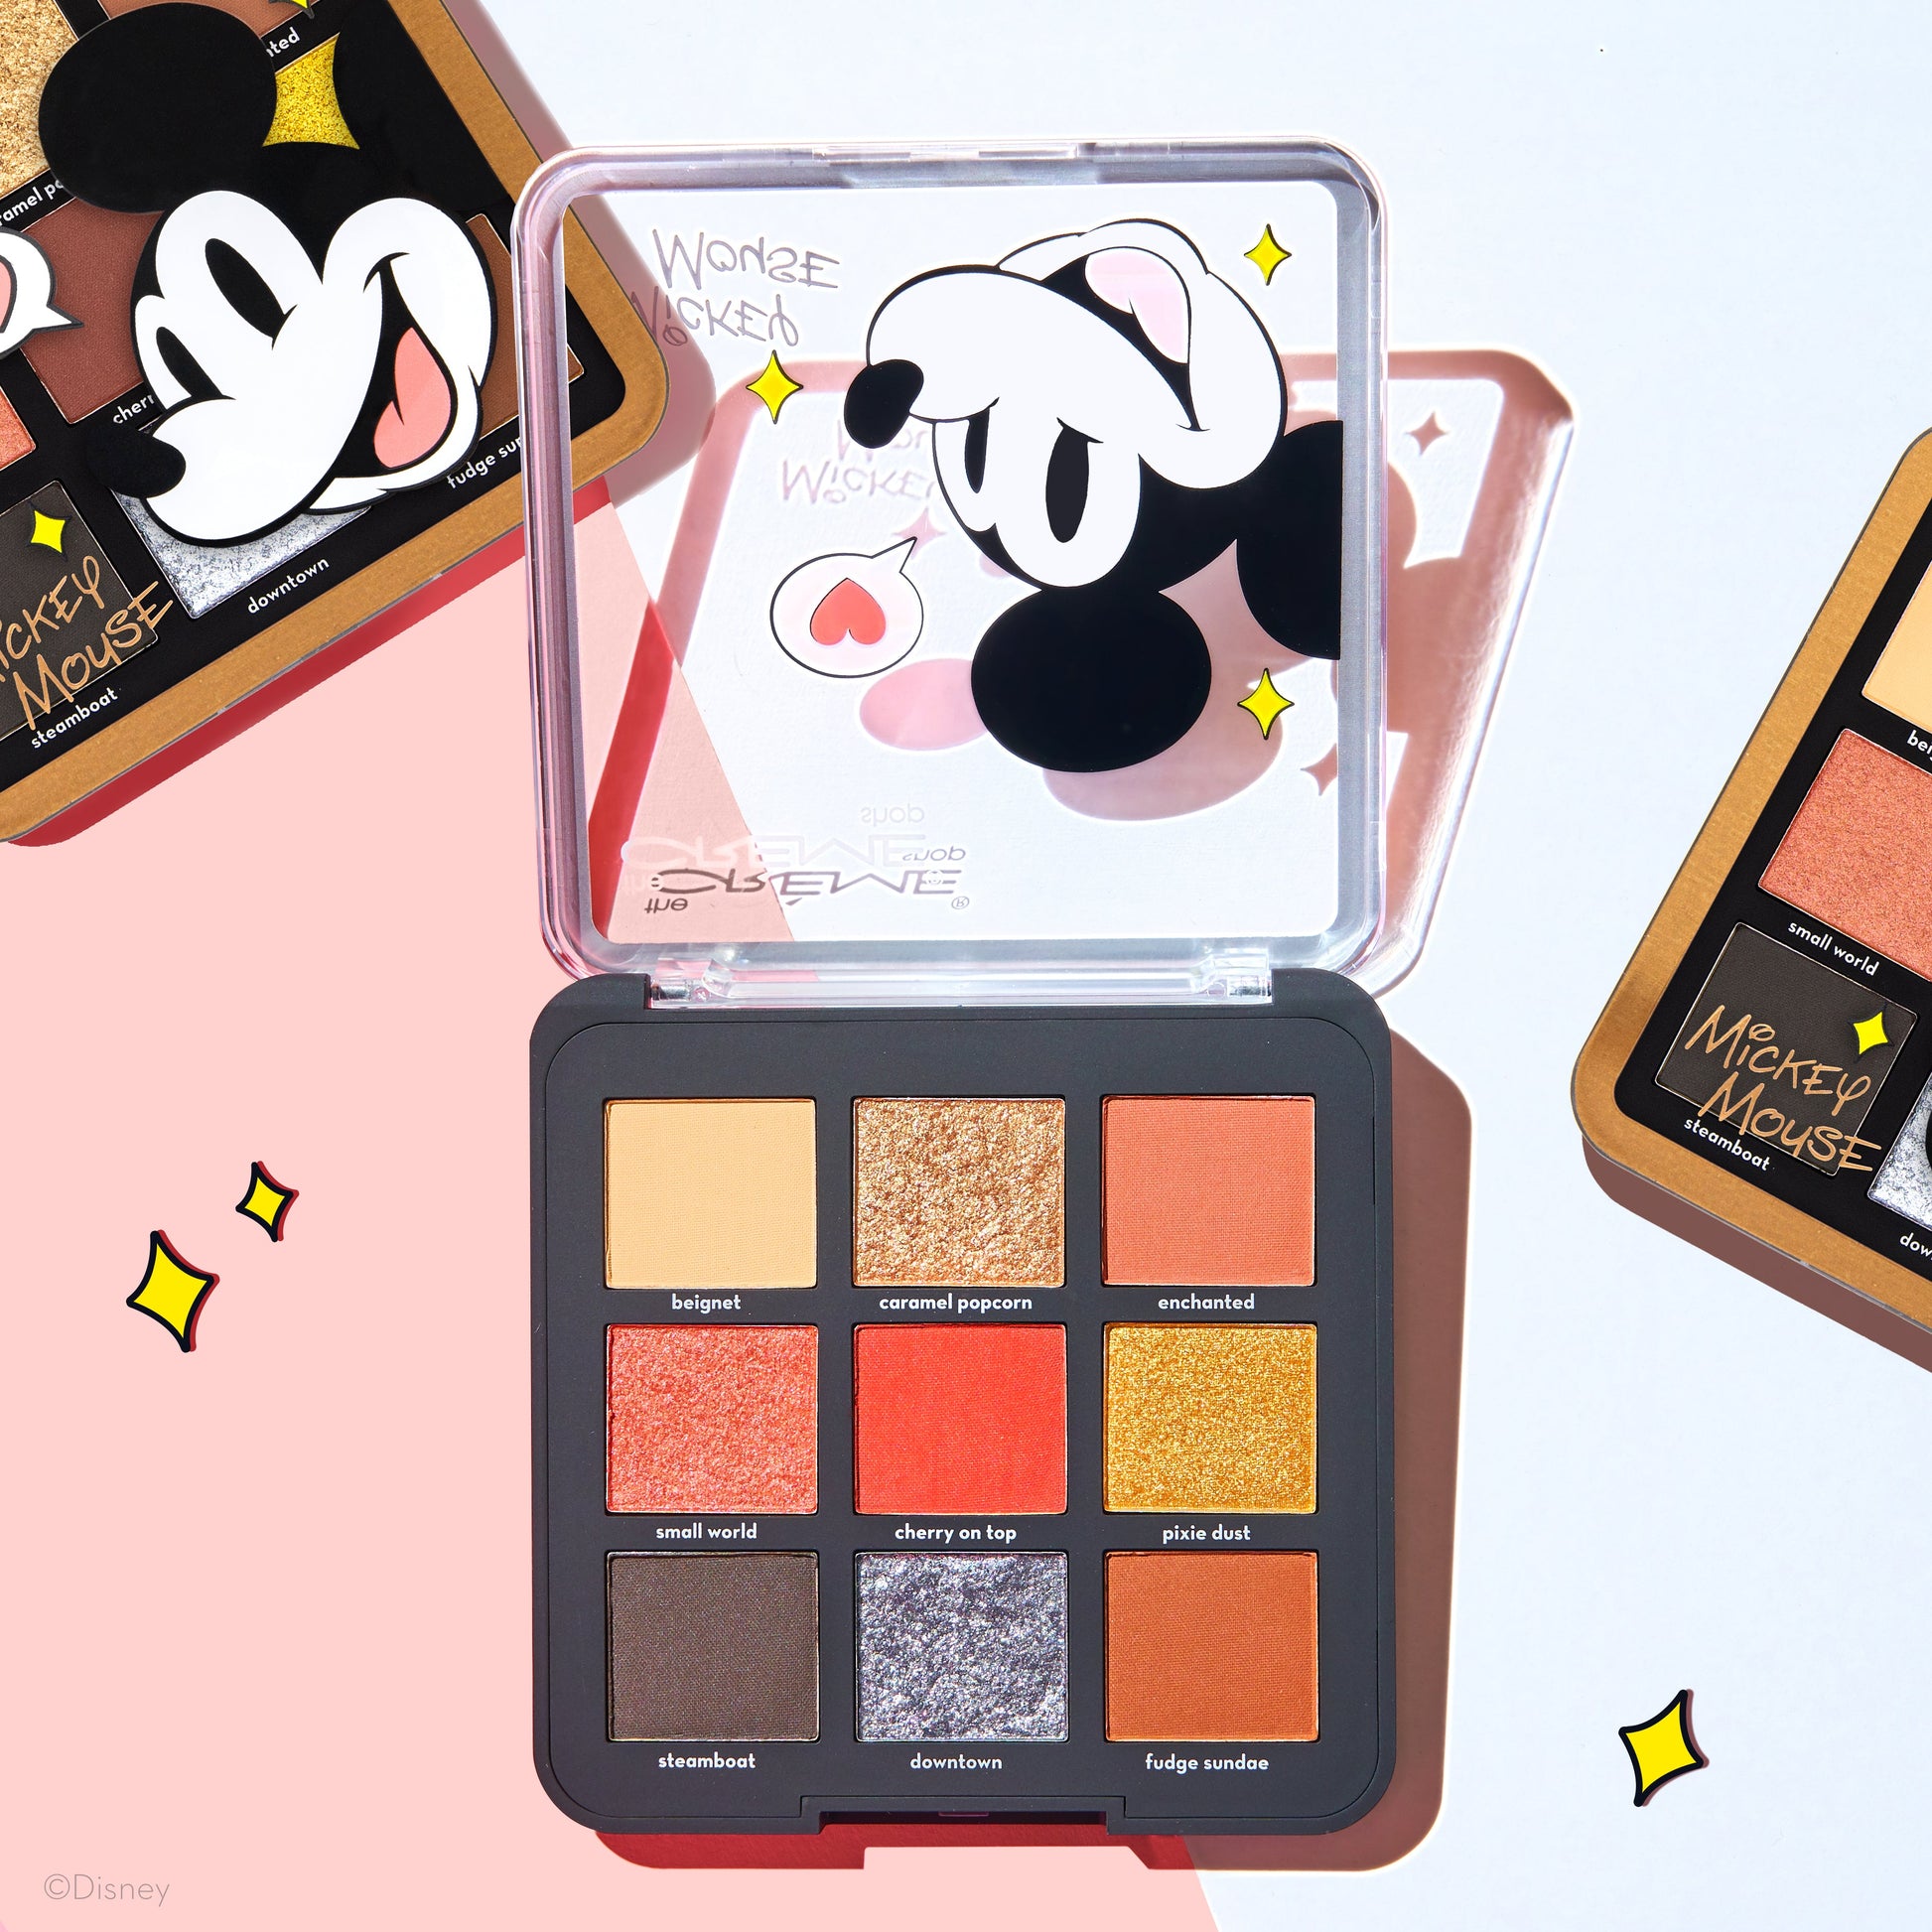 The Crème Shop | Disney: Around the World Eyeshadow Palette (Mickey Mouse) Eyeshadow Palette The Crème Shop x Disney 